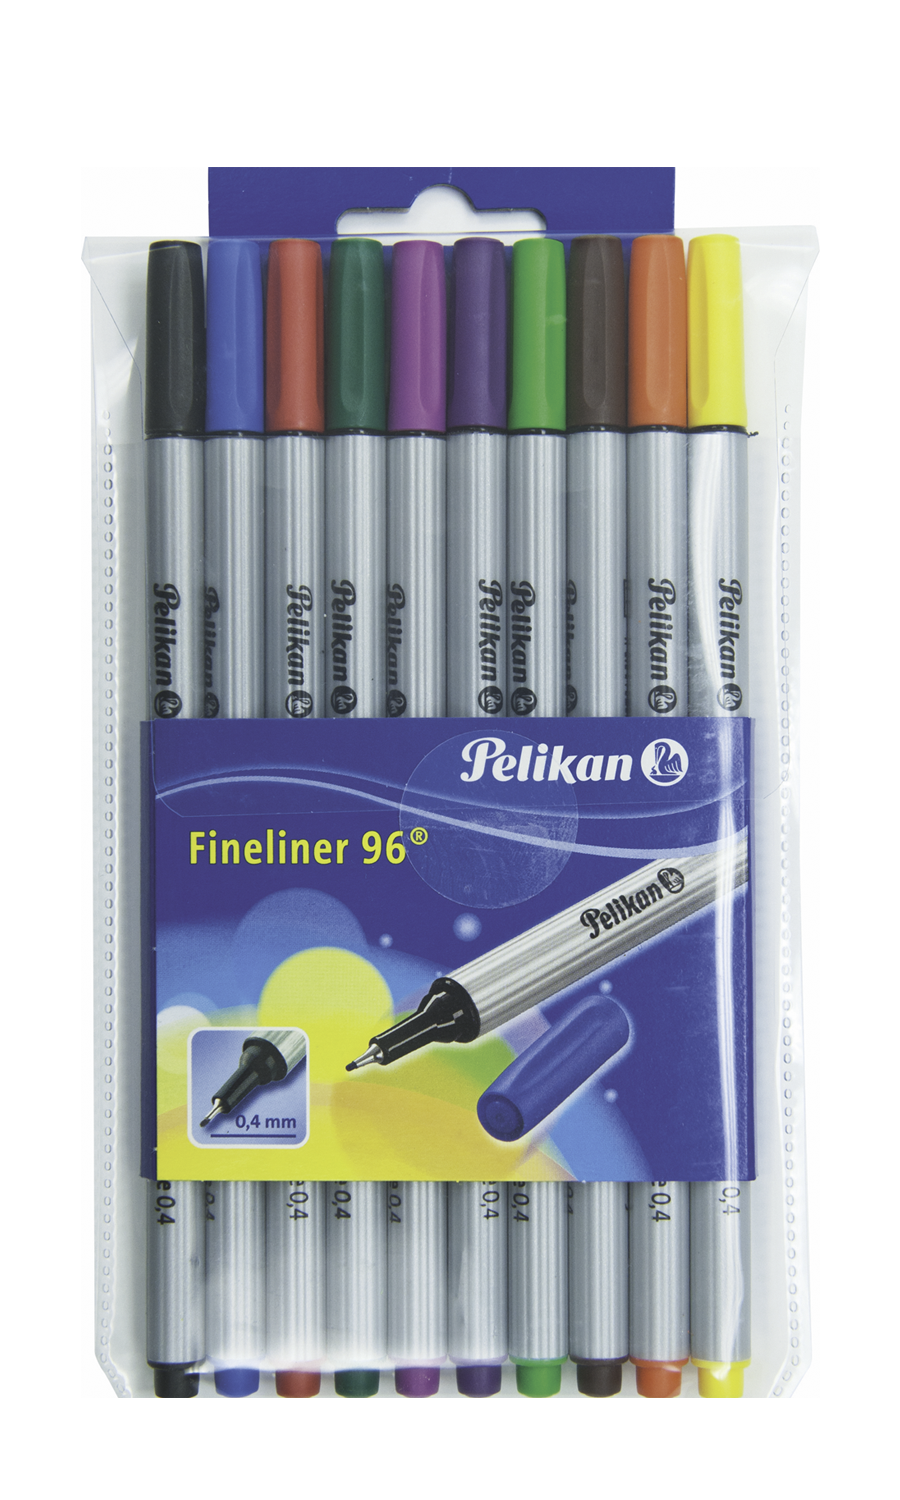 Fineliner 96, Assorted Colors, 10/Pk